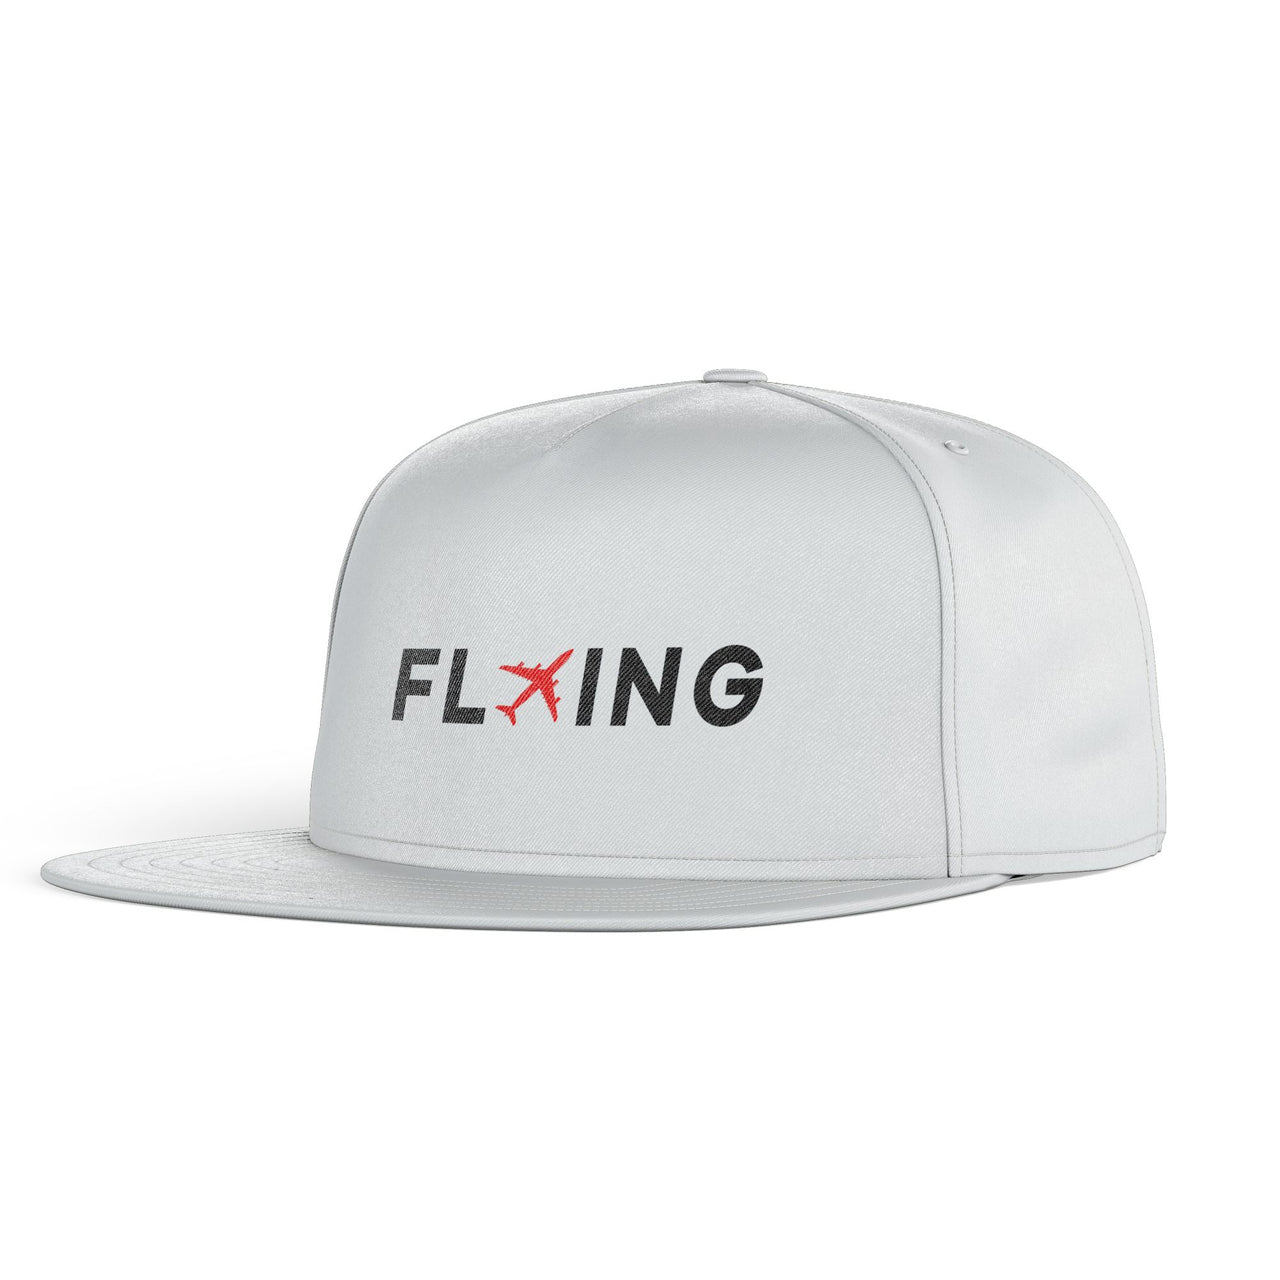 Flying Designed Snapback Caps & Hats